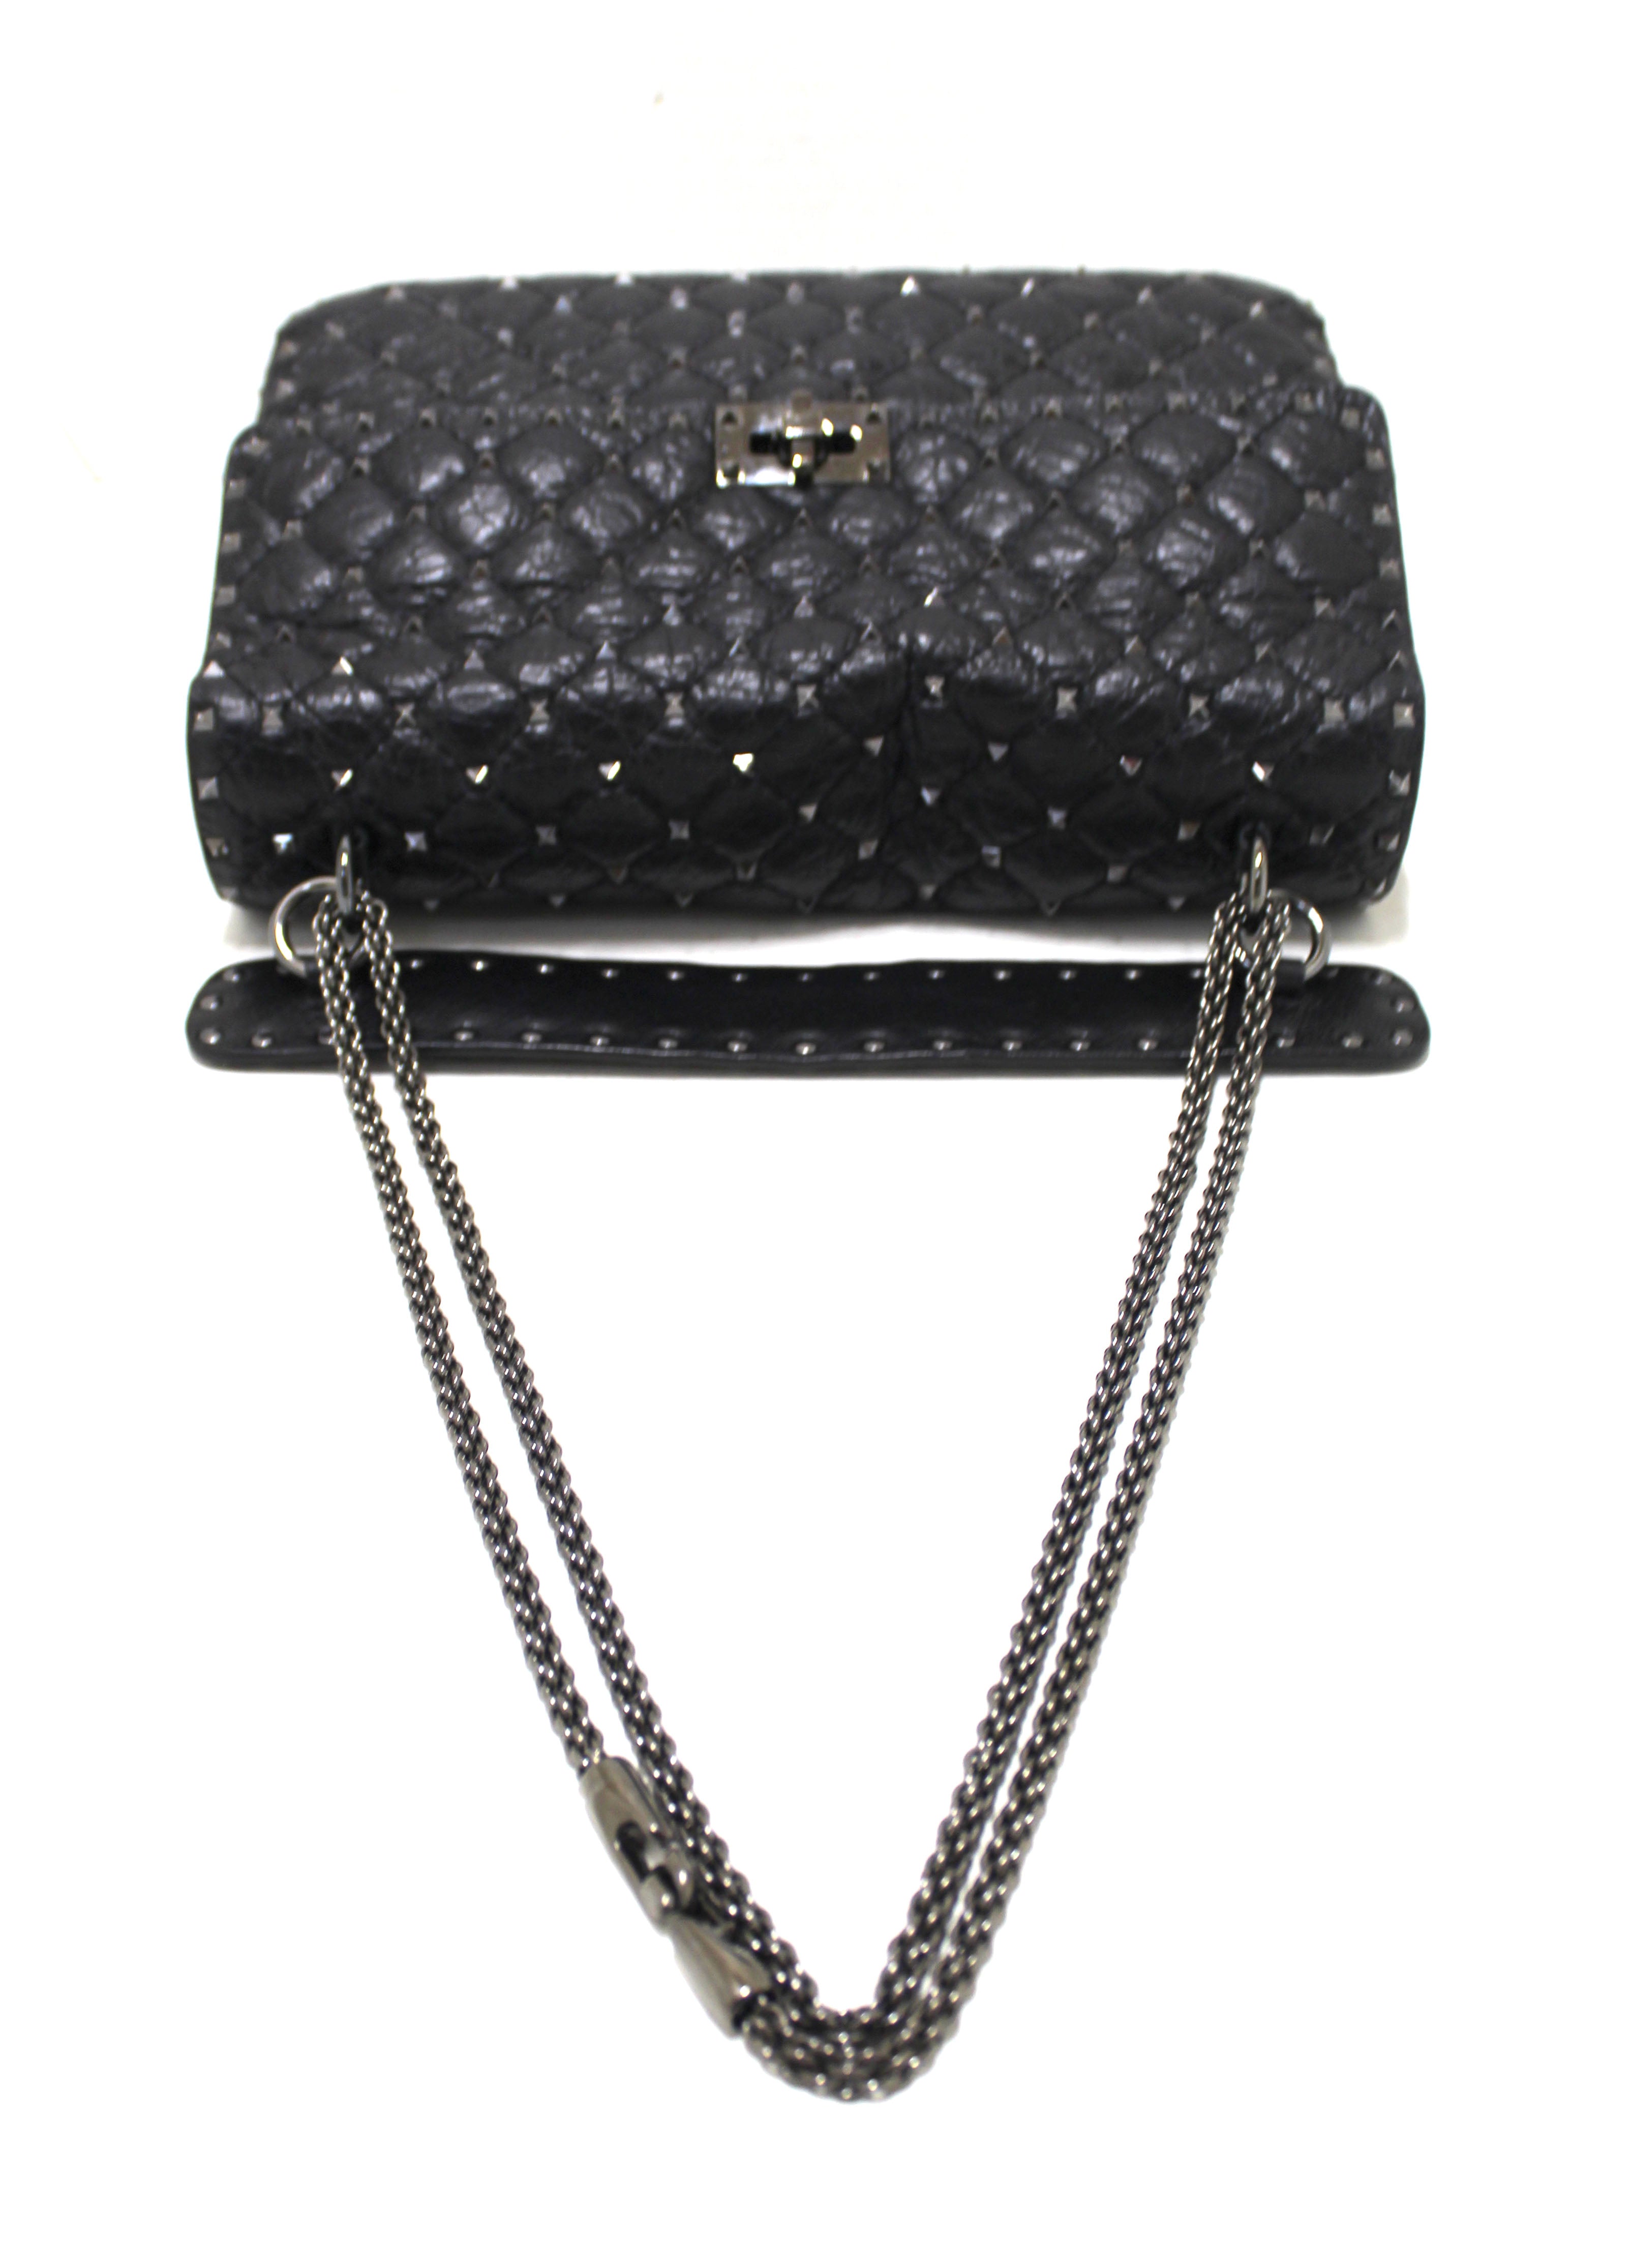 Authentic Valentino Garavani Black Quilted Nappa Leather Rockstud Spike Large Shoulder Bag